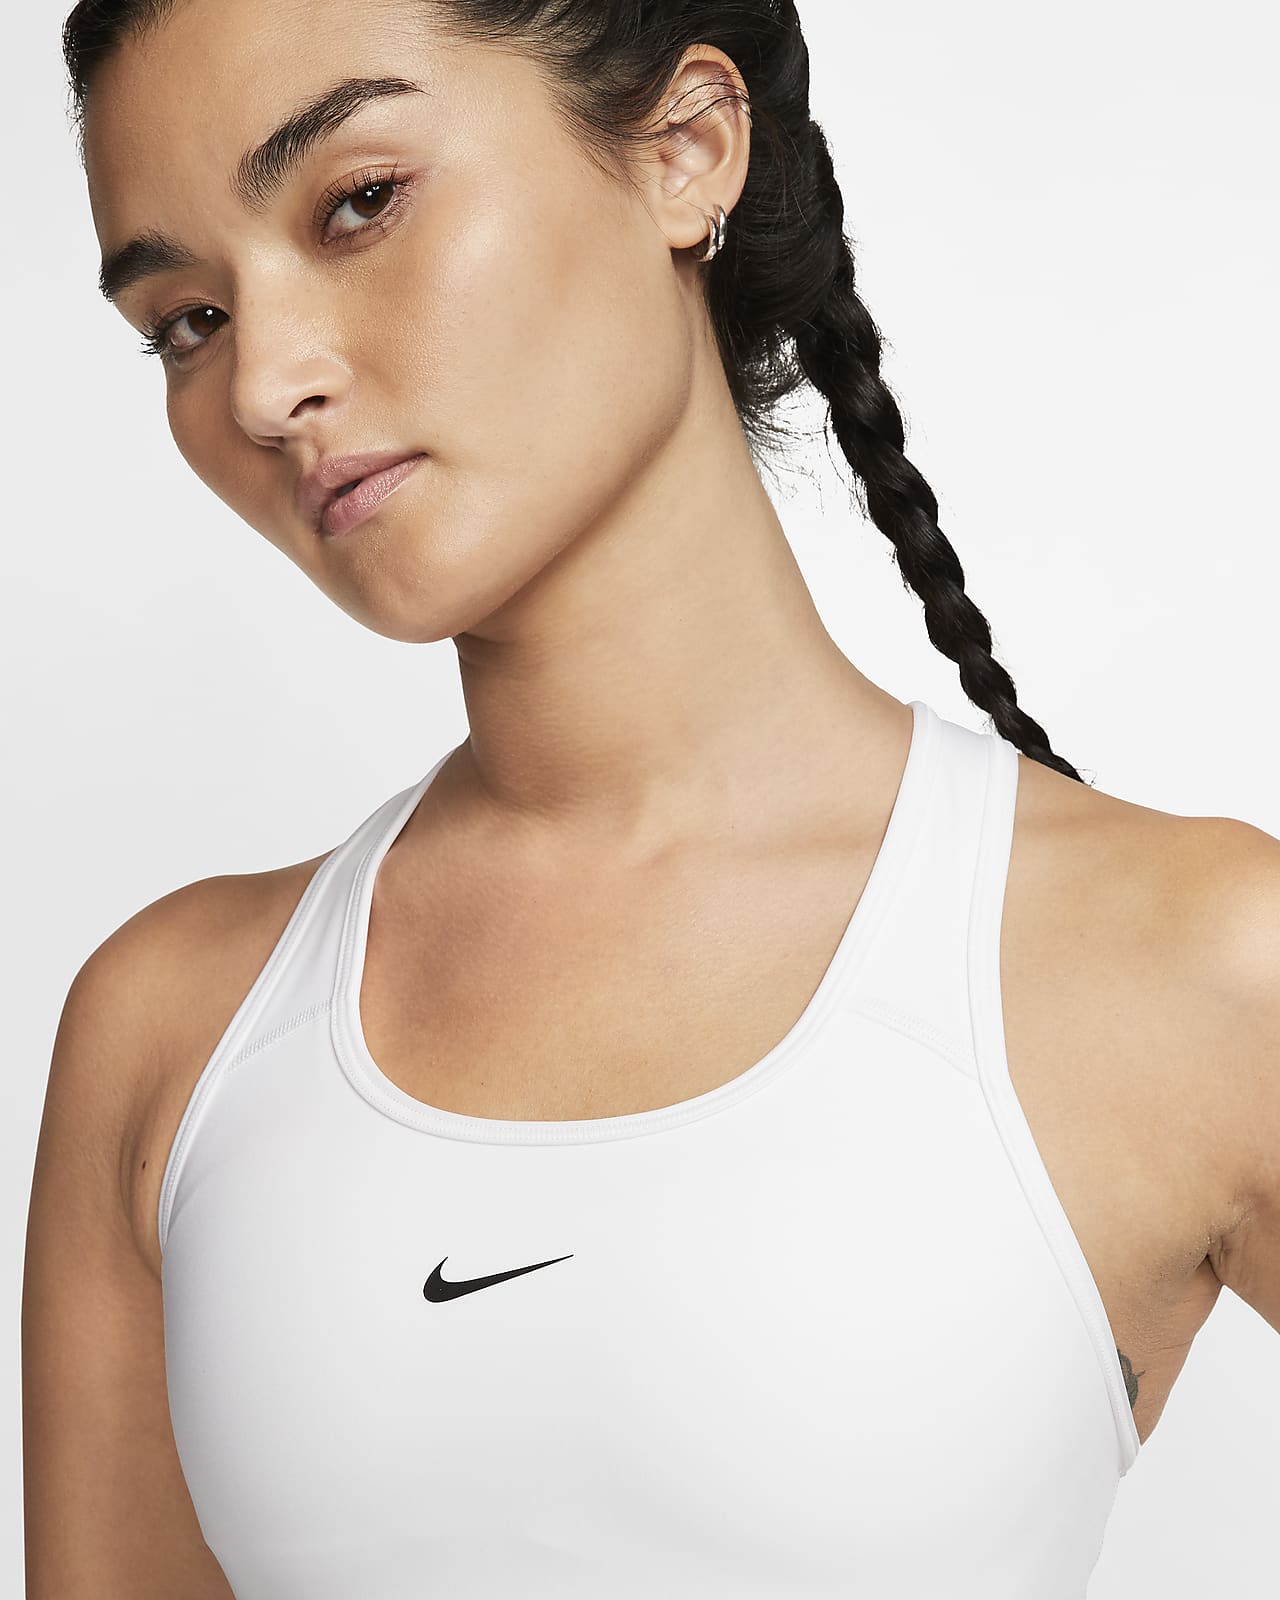 Nike Swoosh Women's Medium-Support Sports Bra